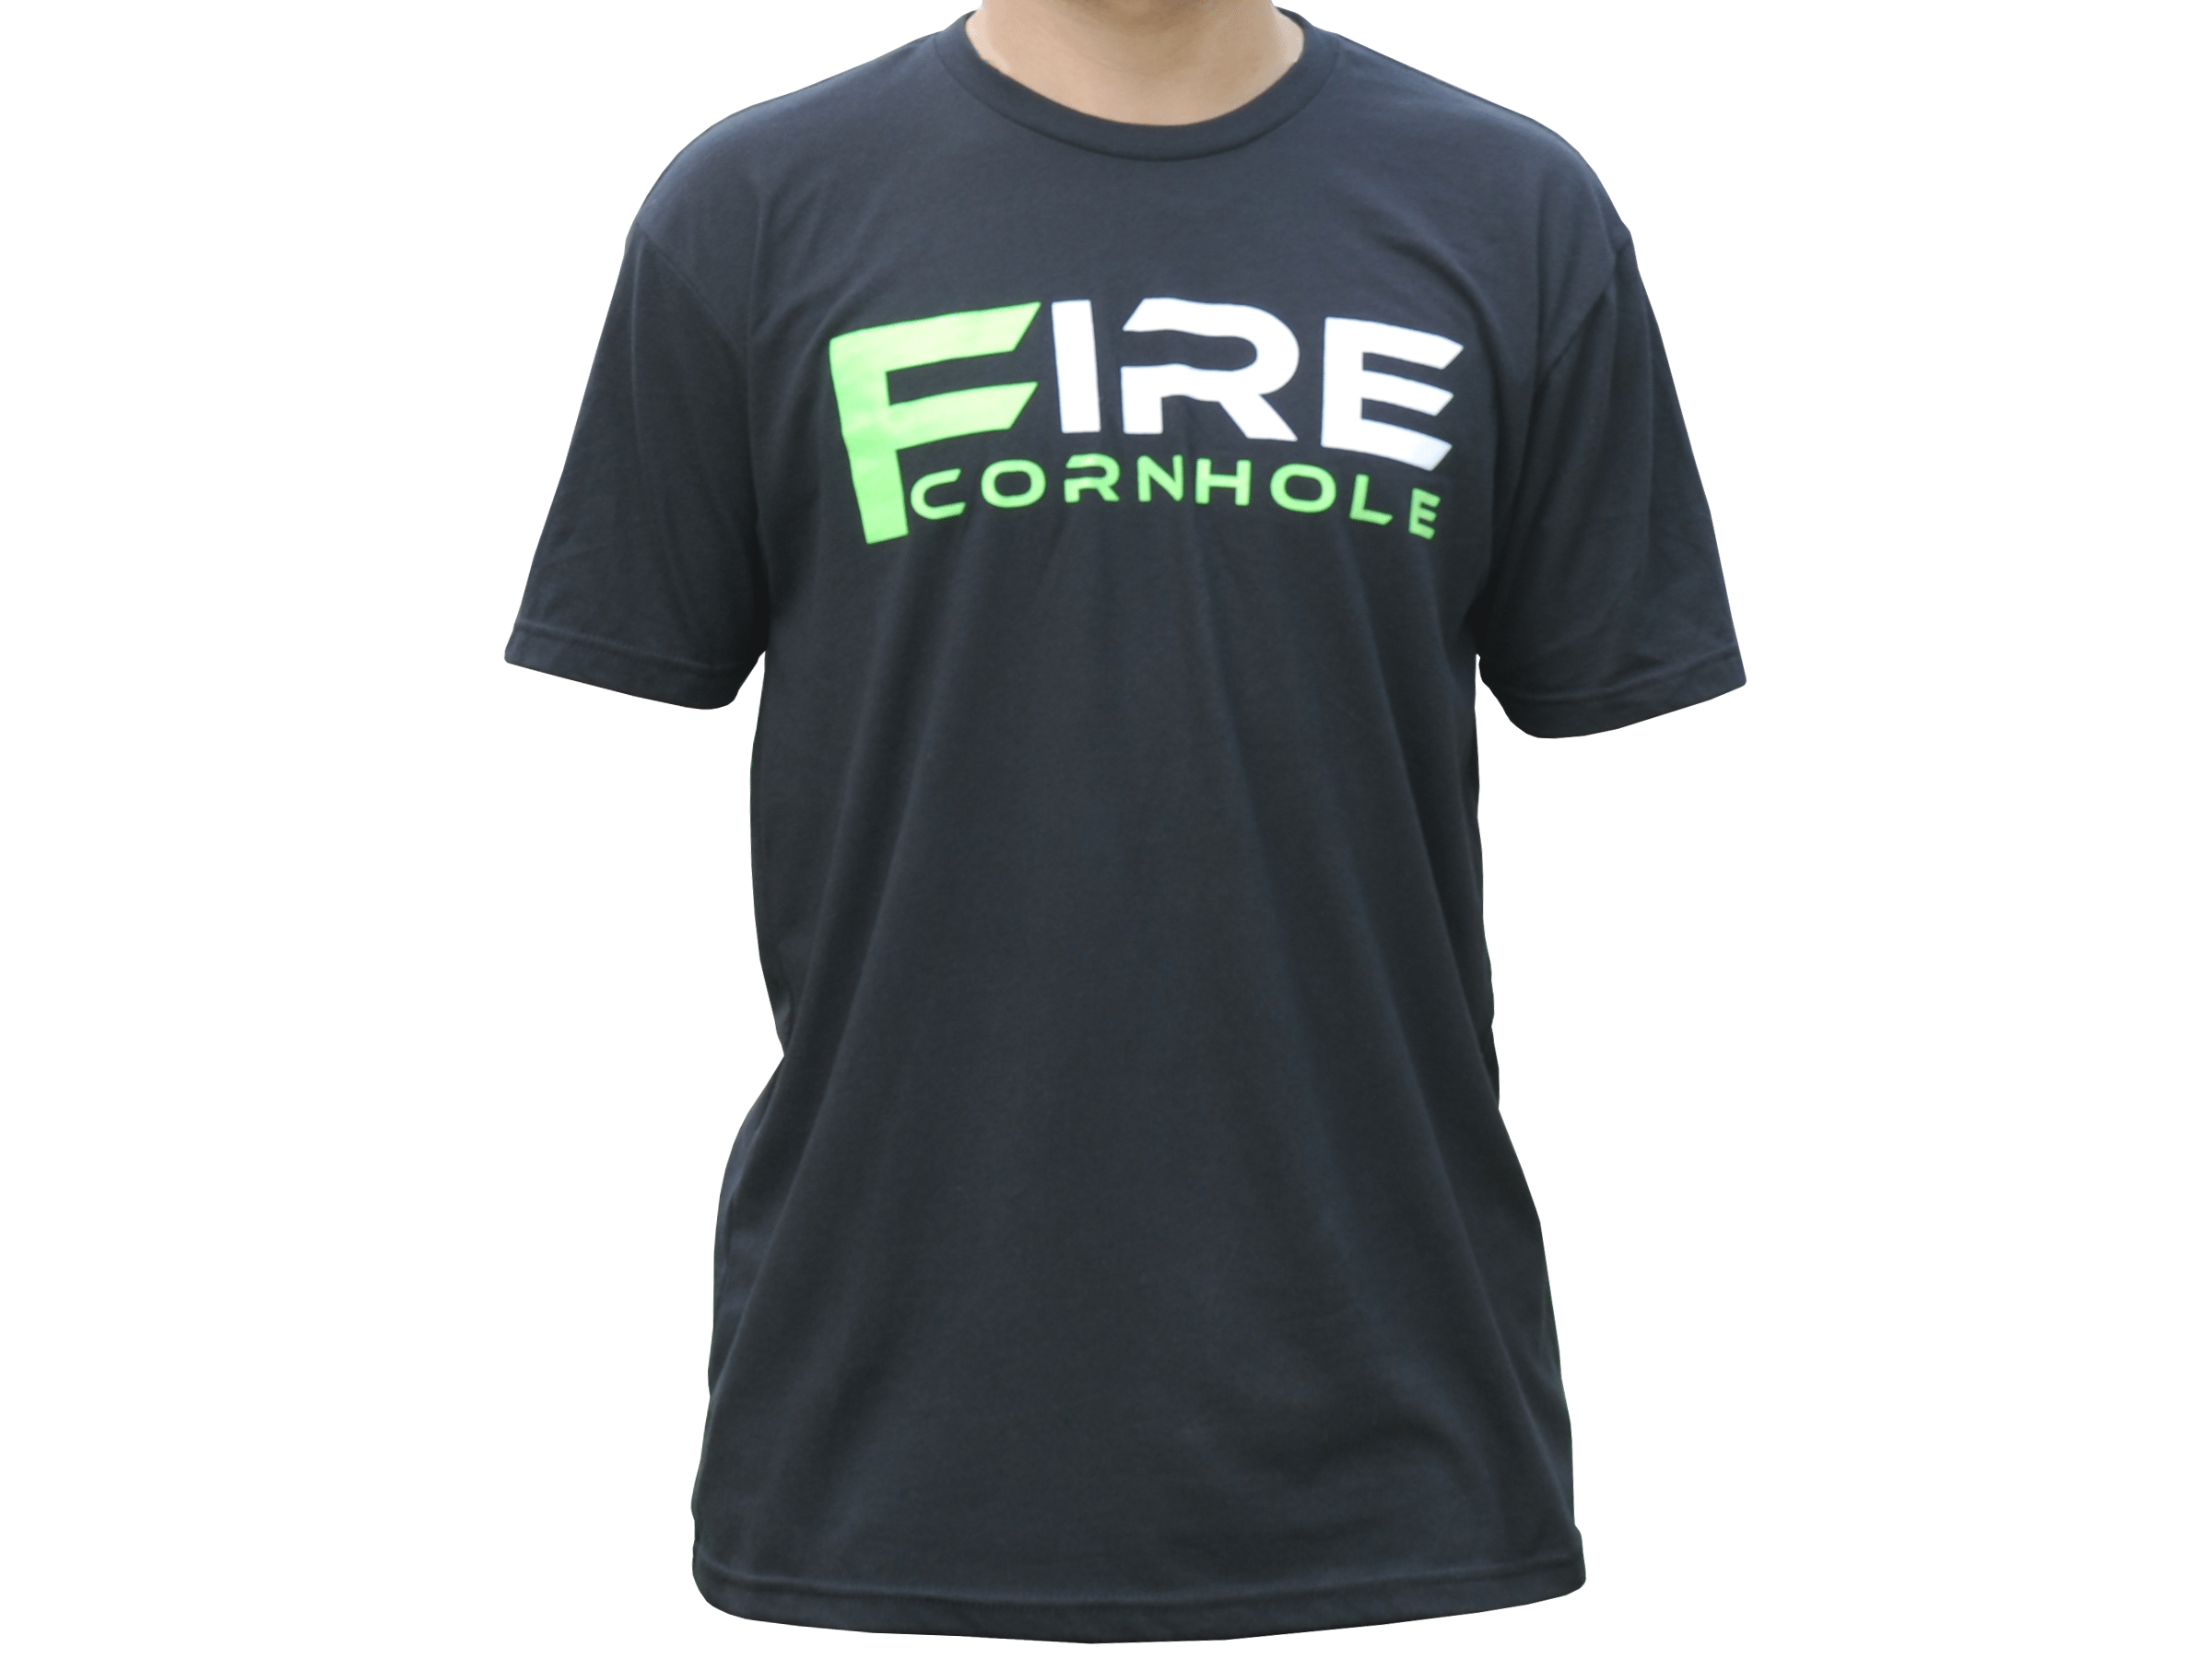 Fire Cornhole Black shirt with green logo